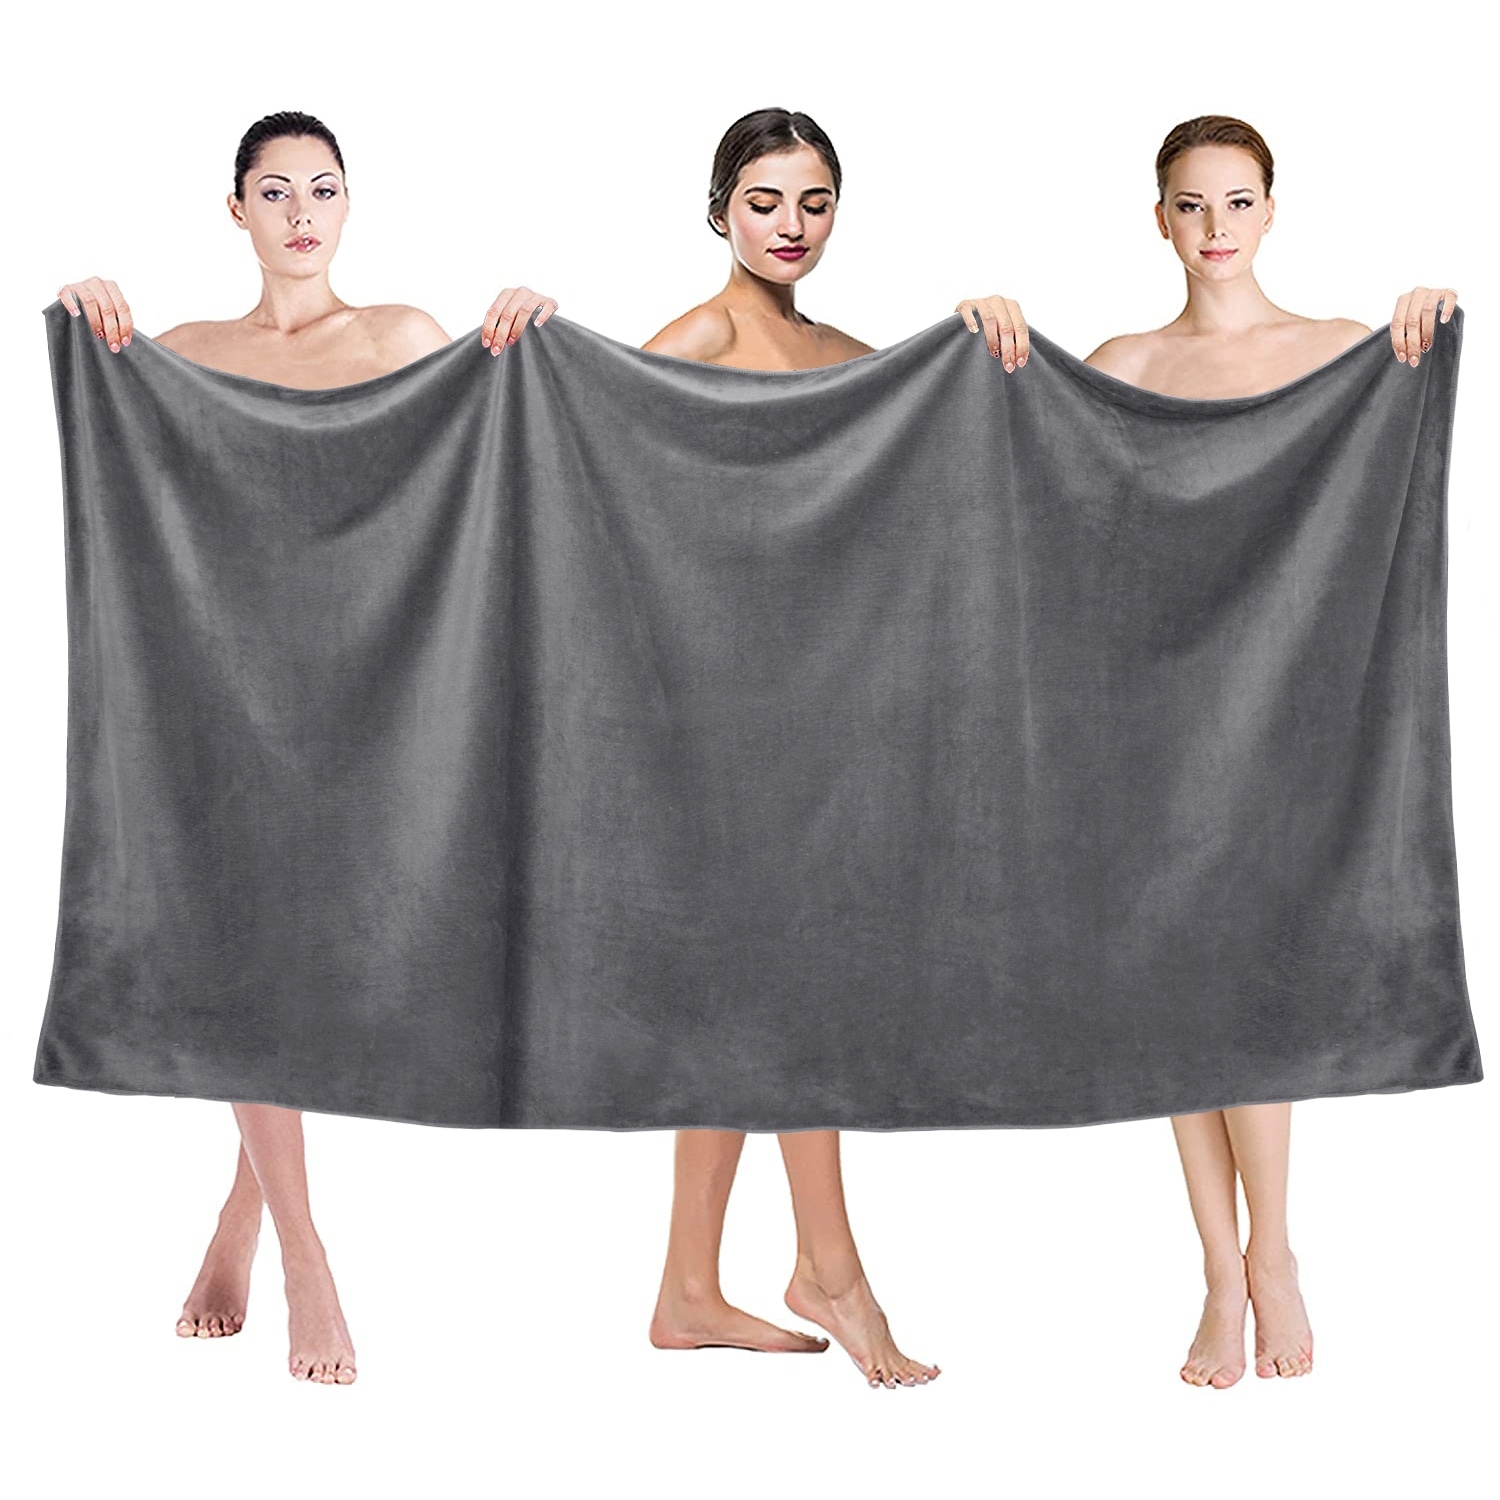 4 Piece Big Bath Sheets 100% Egyptian Cotton Large Size Soft Bathroom Towels